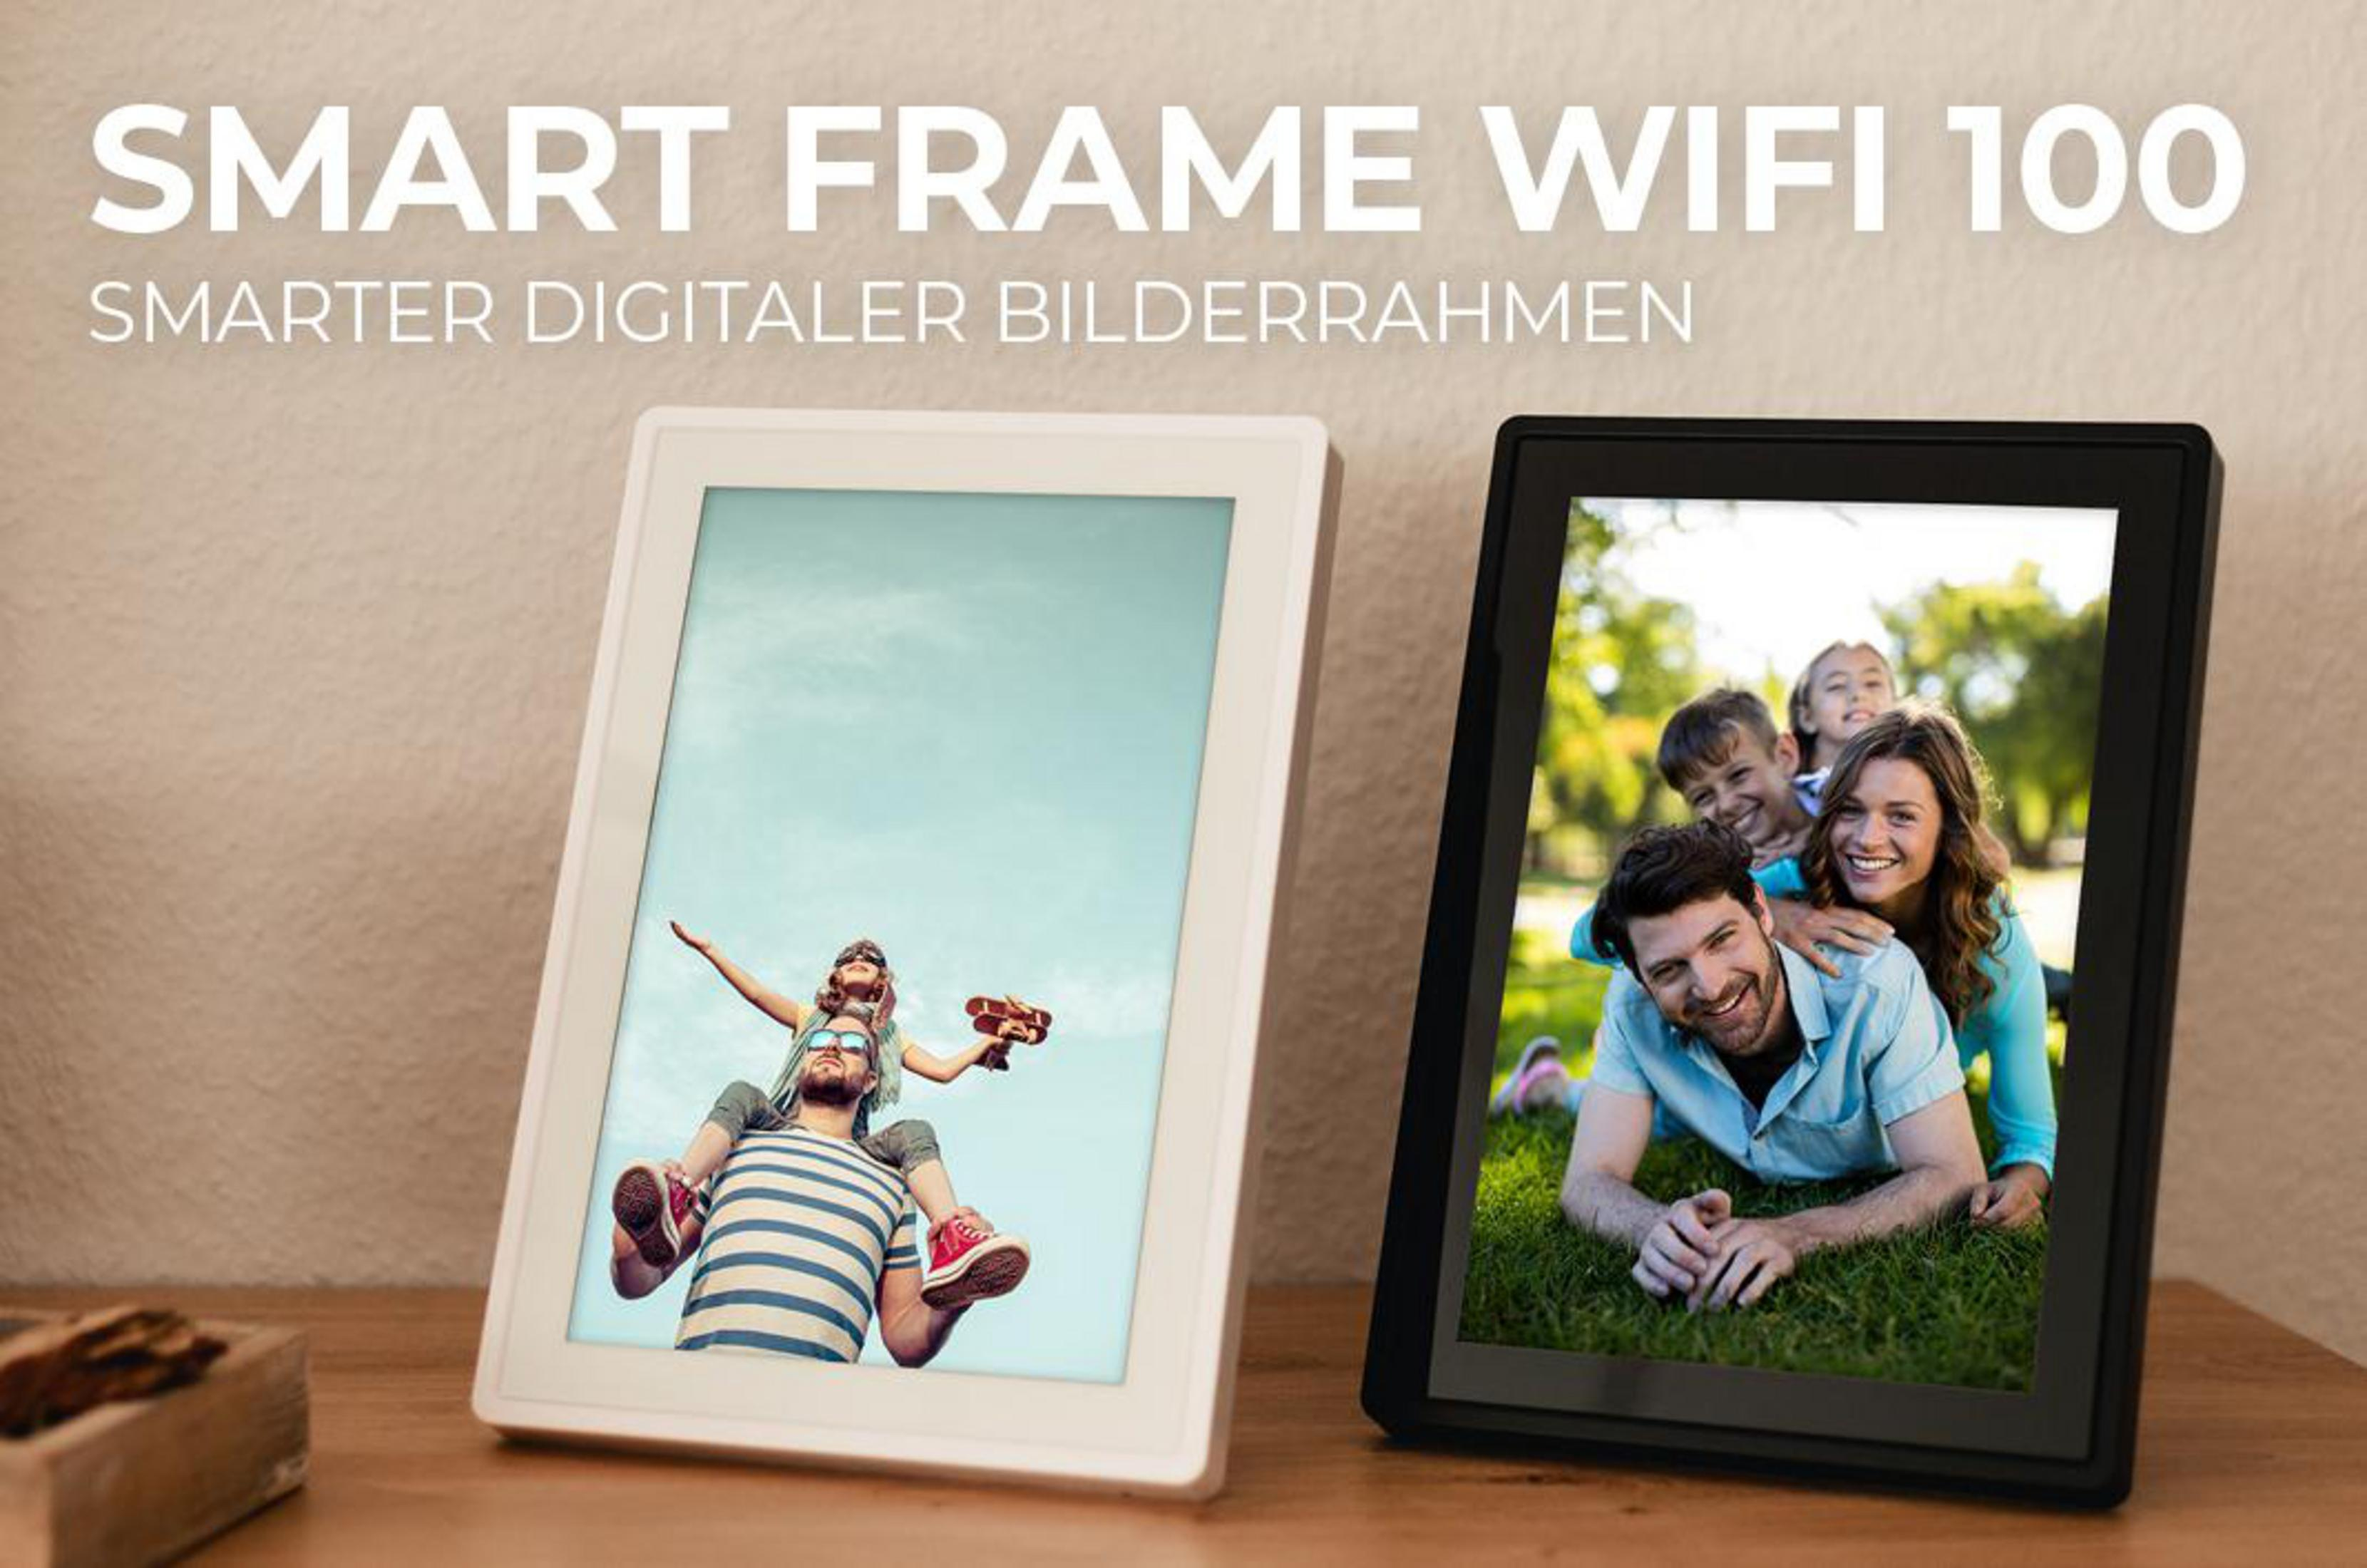 ROLLEI 30272 SMART FRAME WIFI 100 Bilderrahmen, Digitaler BILDERR DIGITALER Weiß 25,53 1280p, WHITE cm, 800 x